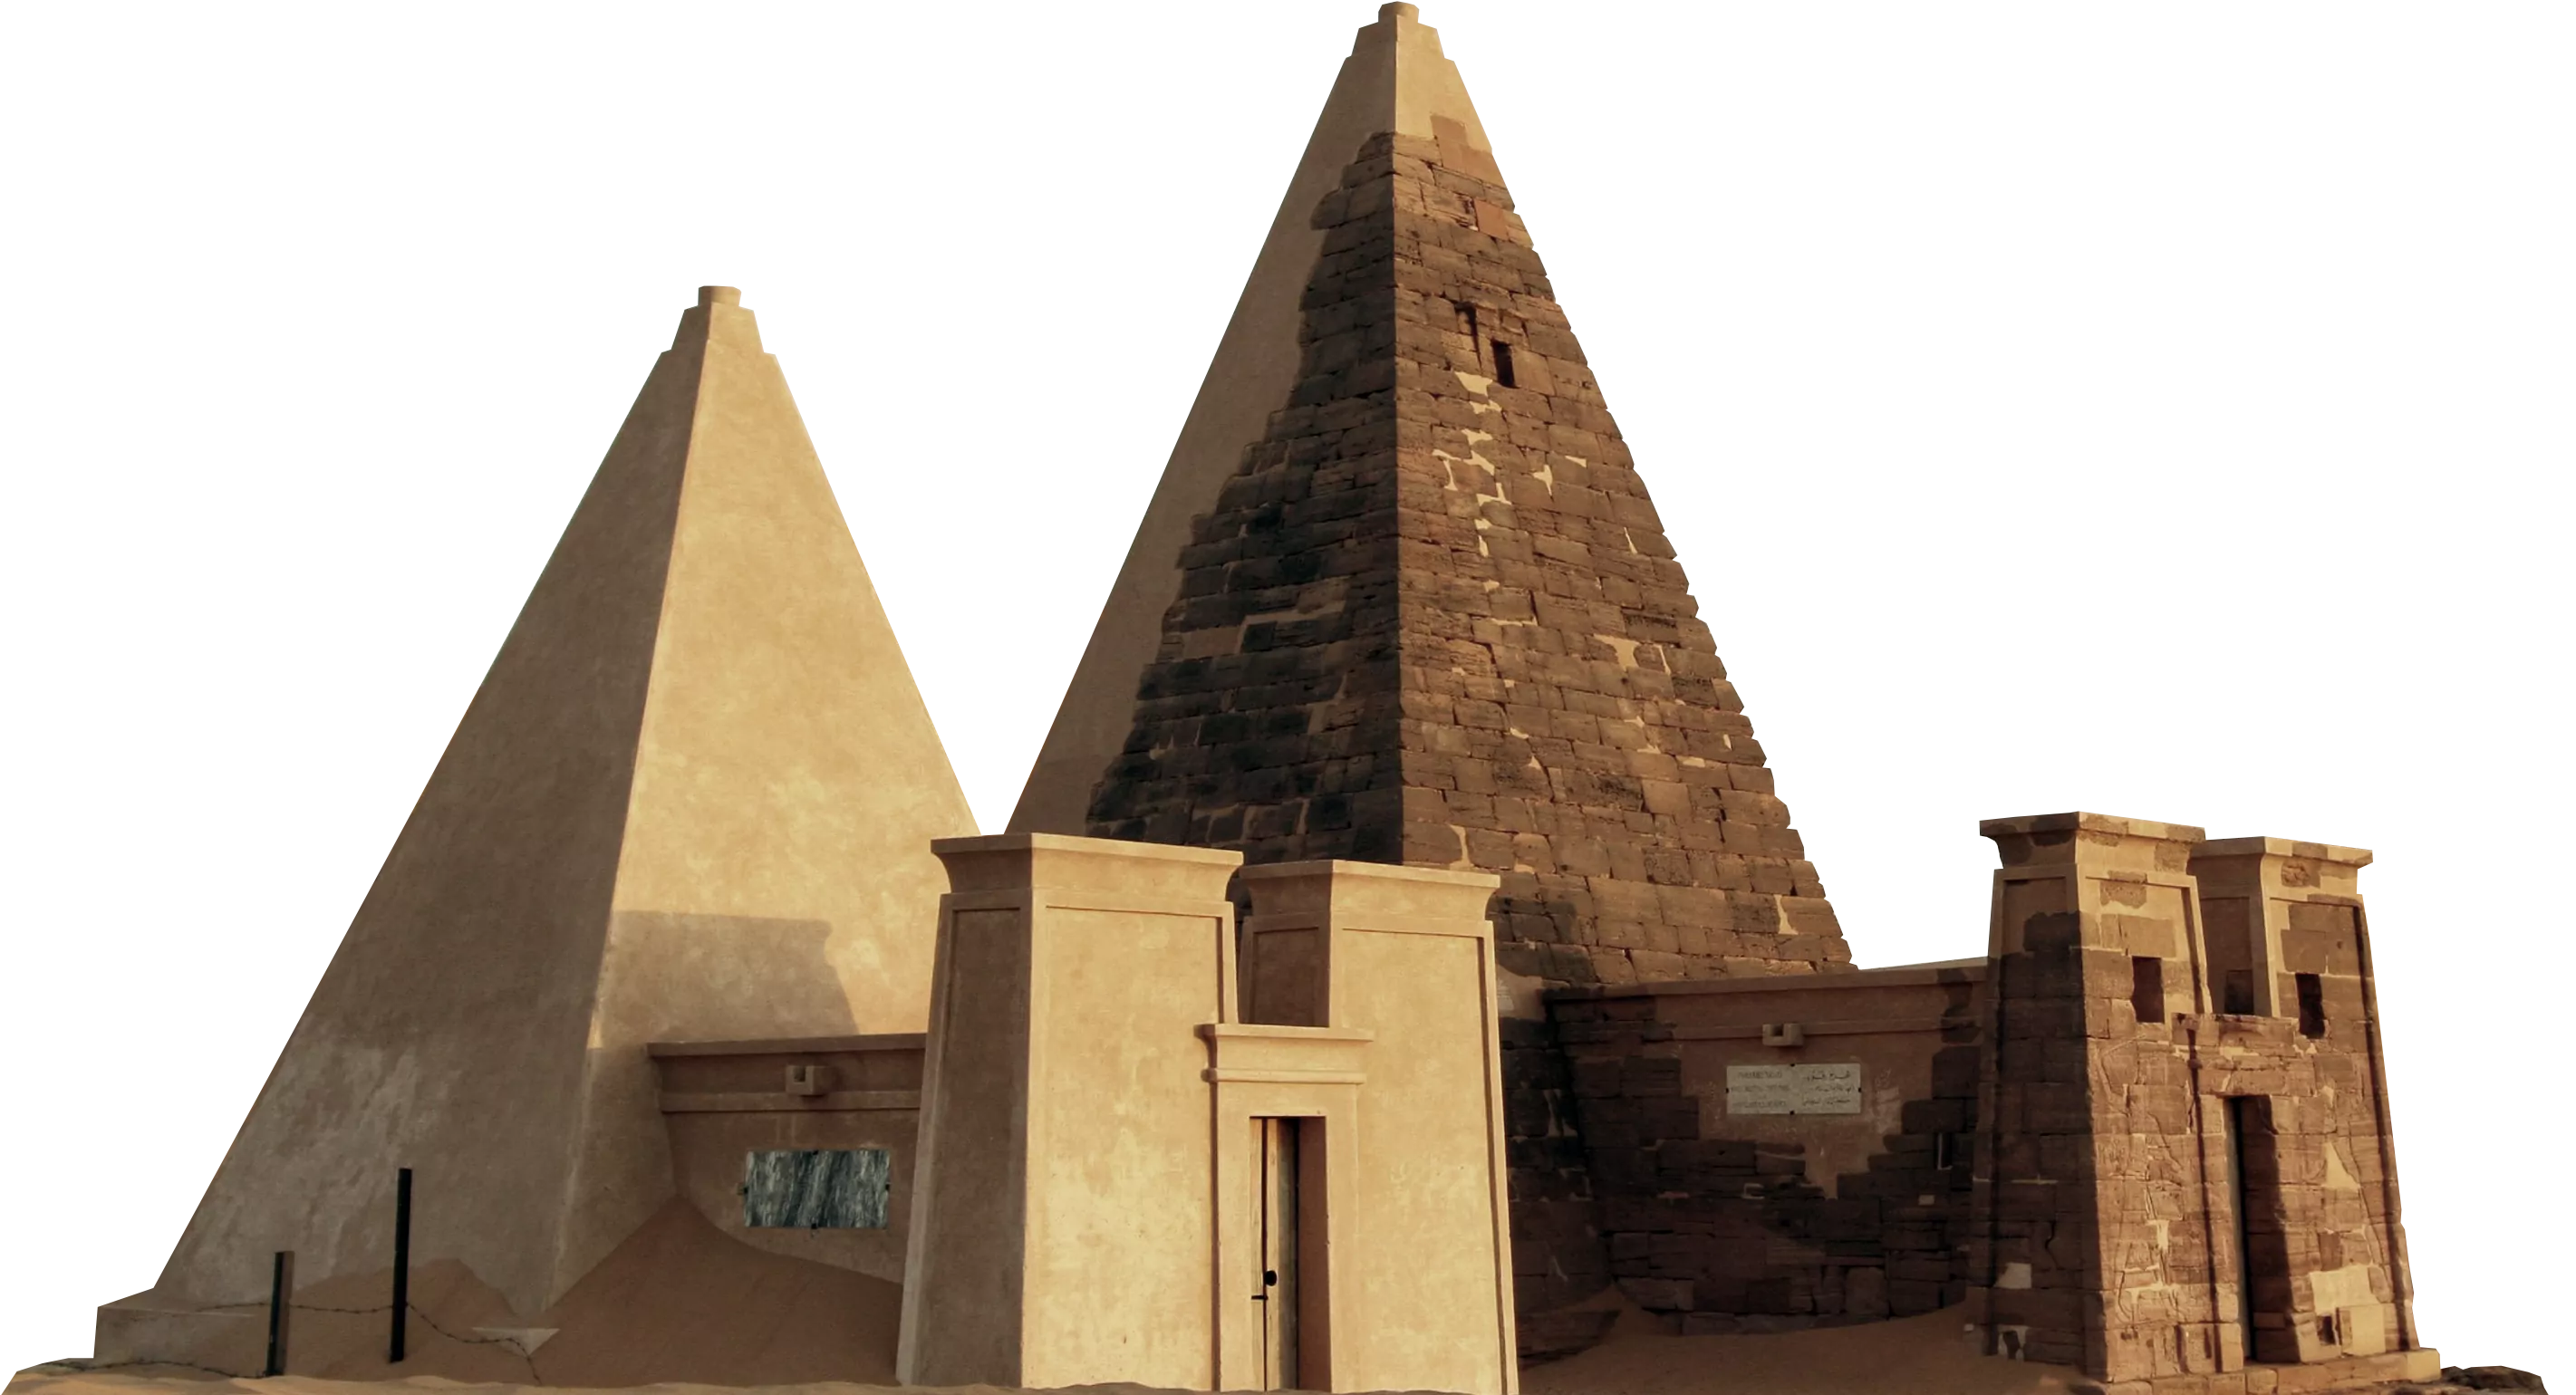 Kushite Pyramids at Meroë, Kingdom of Kush